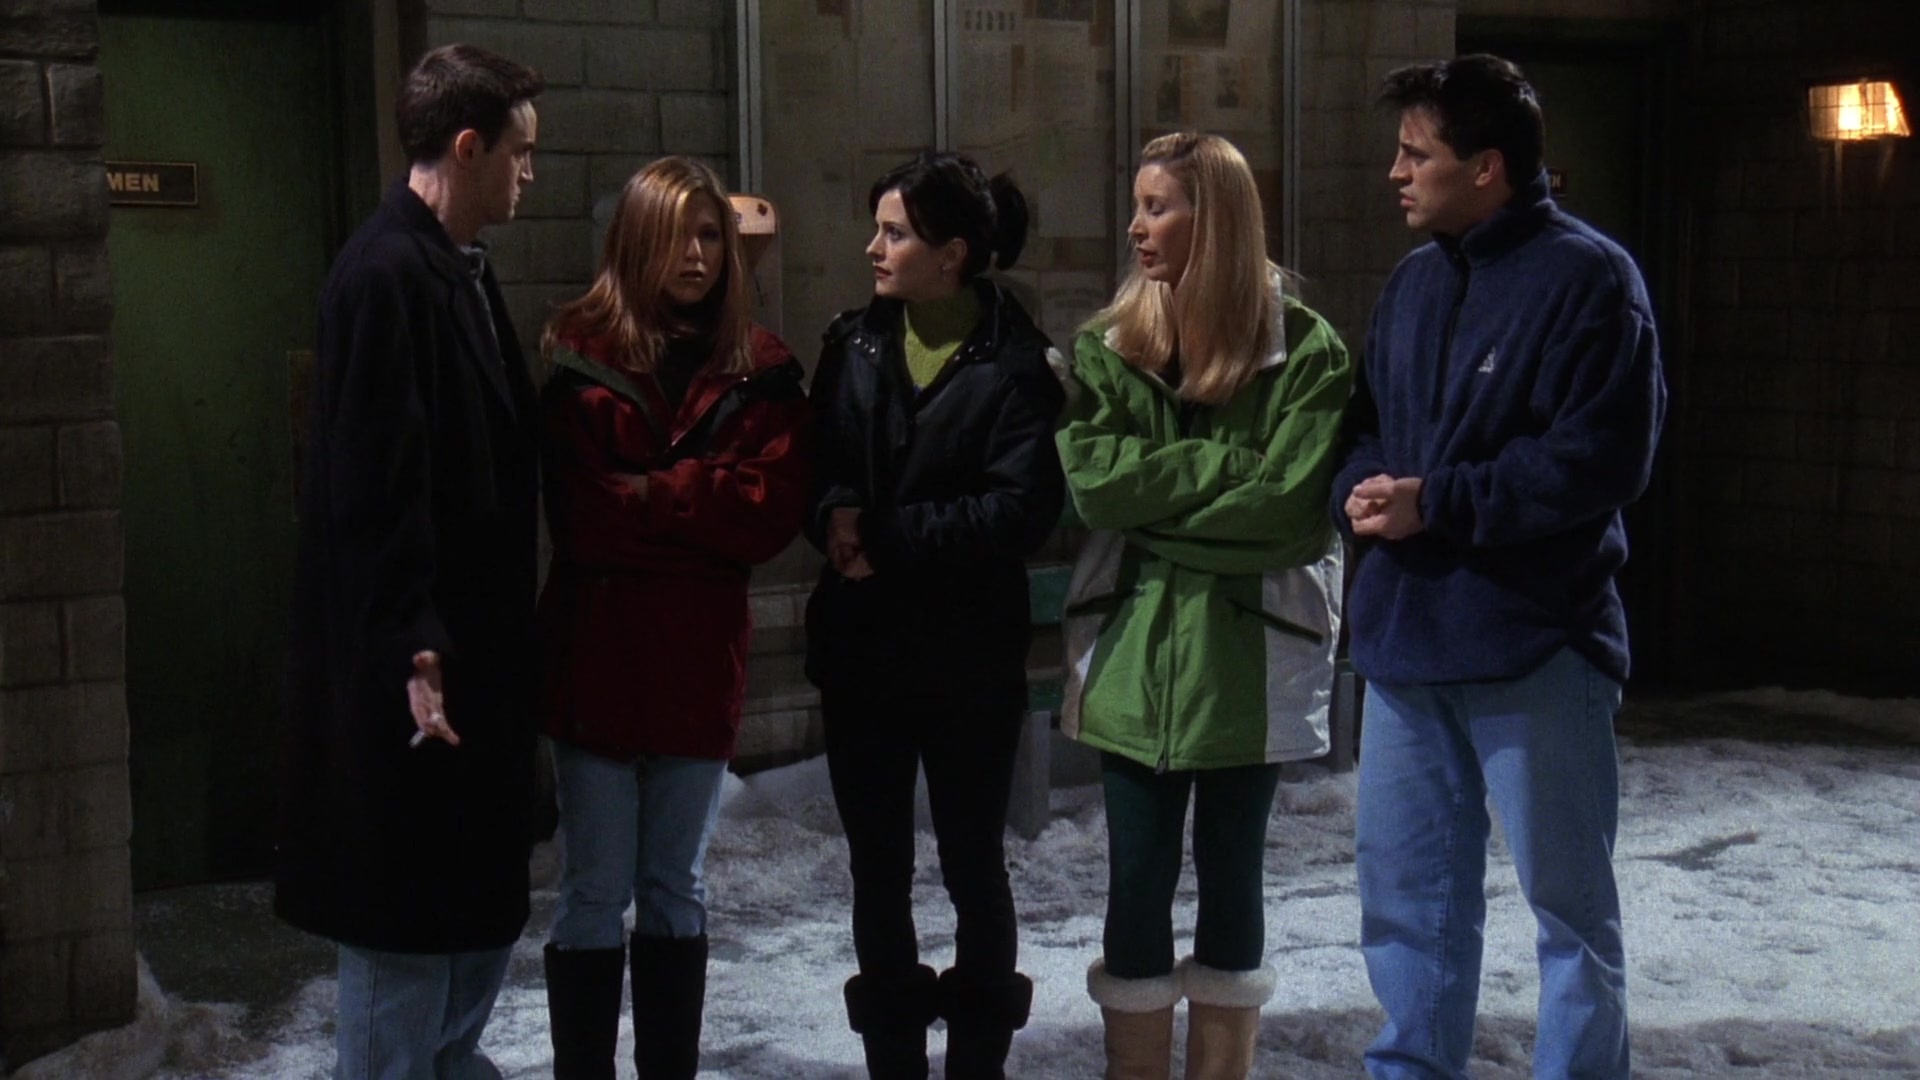 Champion NBA Jersey Worn By Matt LeBlanc (Joey Tribbiani) In Friends Season  7 Episode 1 “The One With Monica's Thunder” (2000)